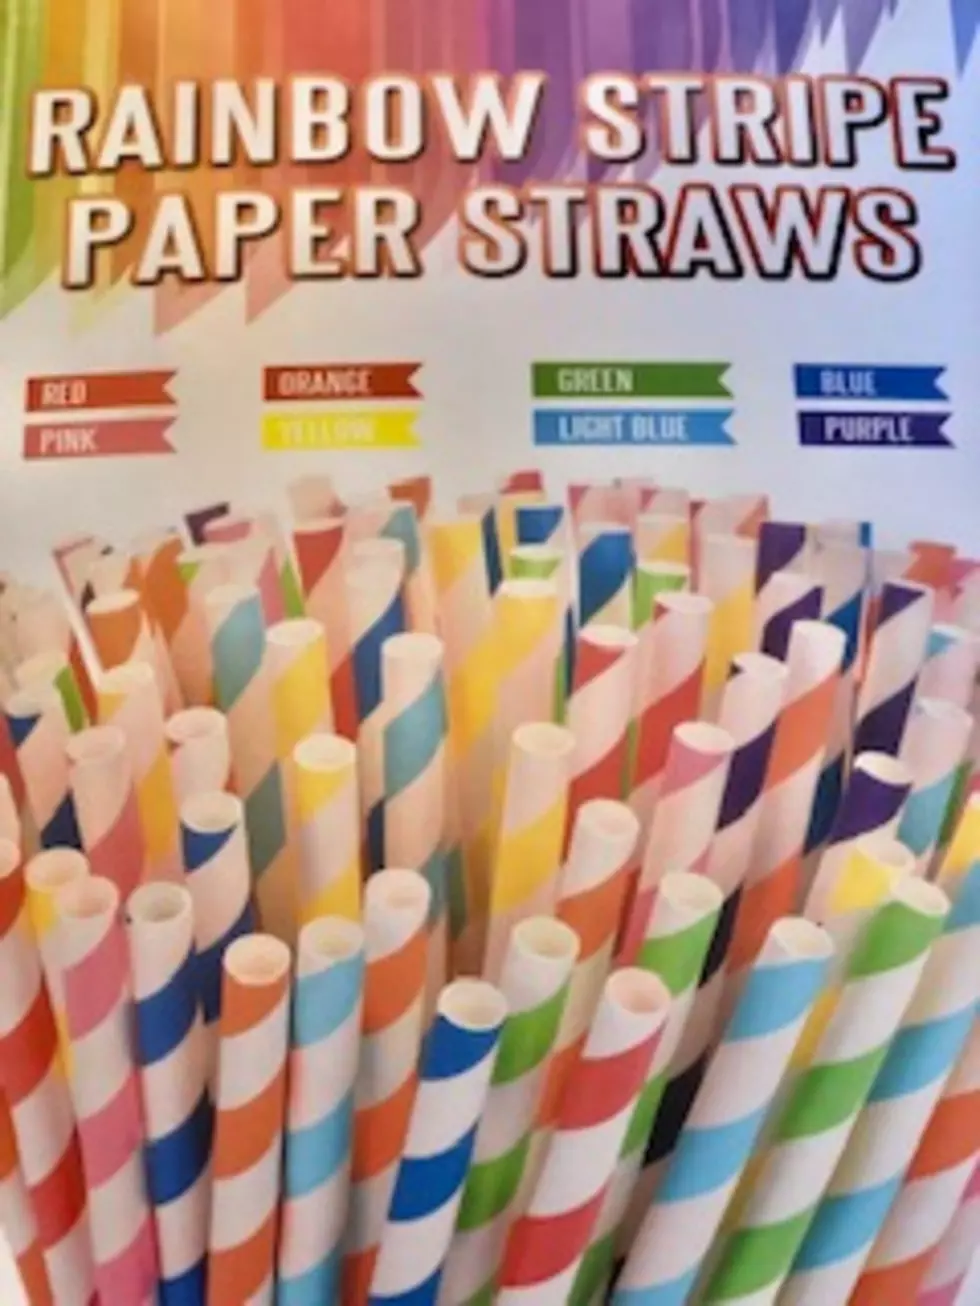 I Hate Paper Straws! There, I Said It…